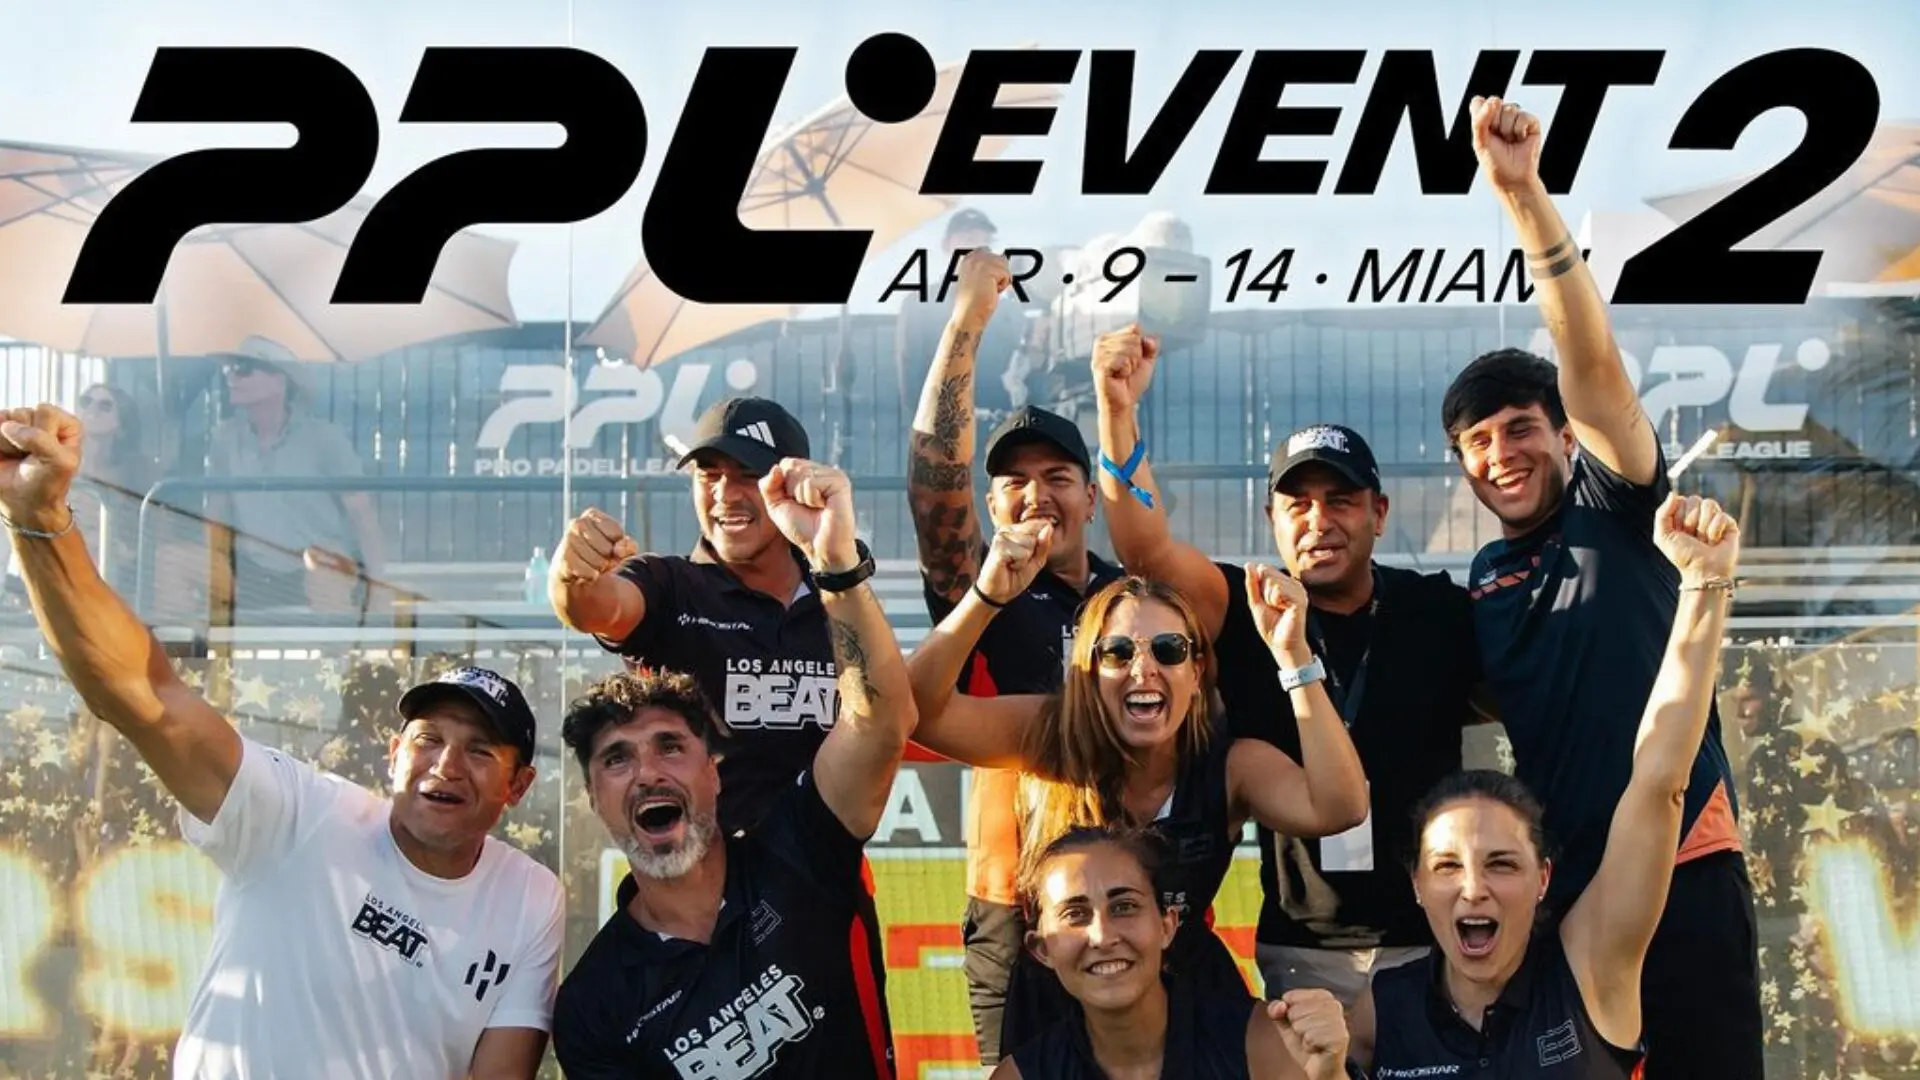 Pro Padel リーグ: ロサンゼルス ビートの第 2 ステージ!